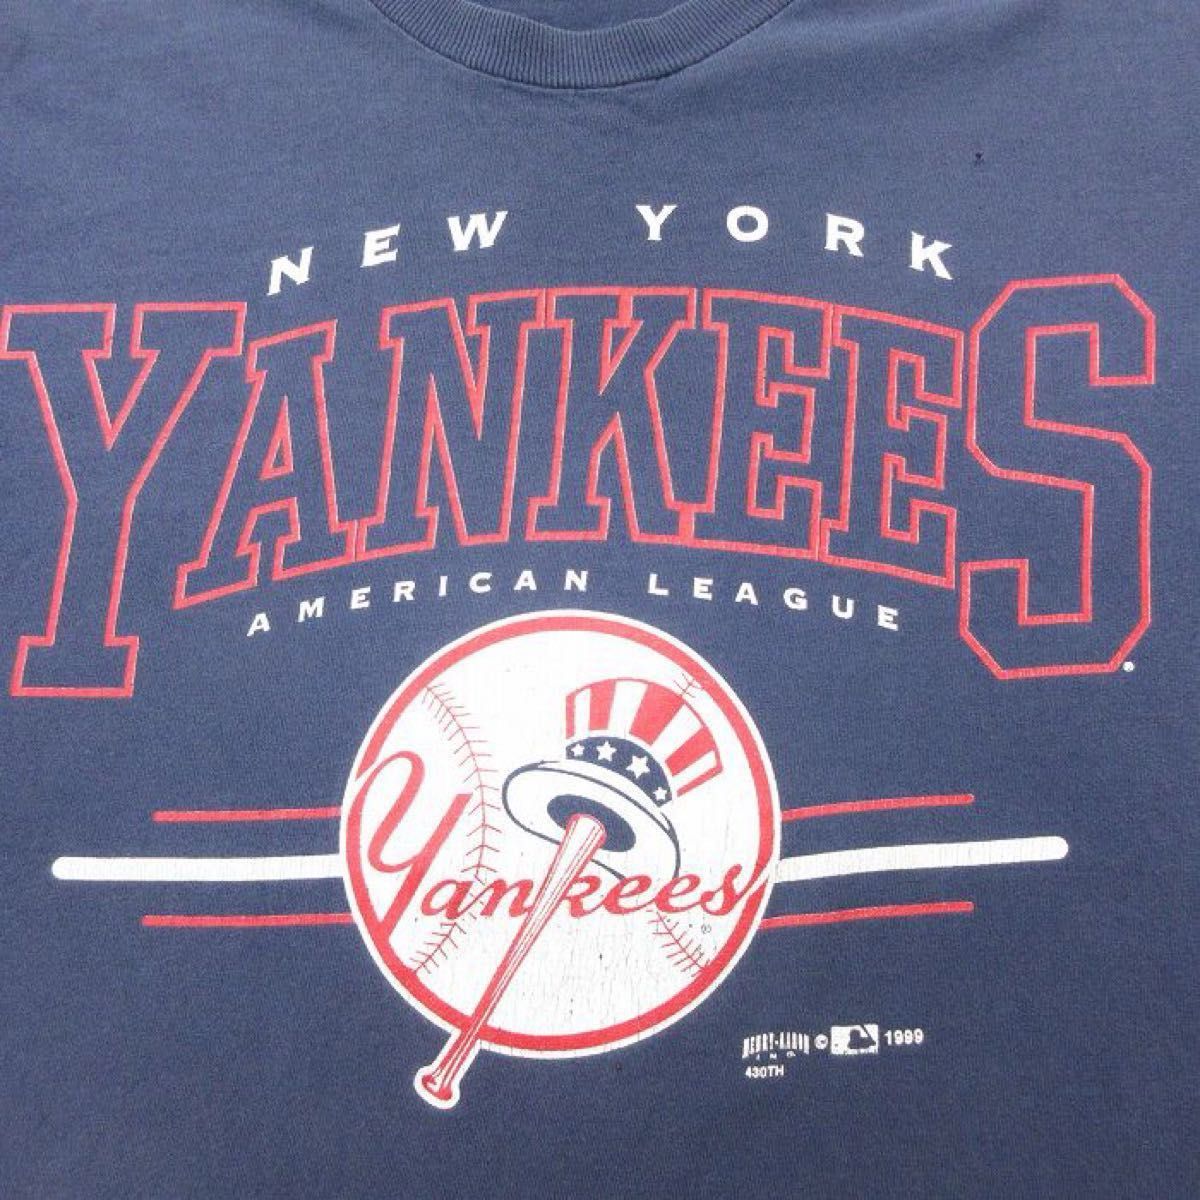 90s ニューヨークヤンキース　Tシャツ